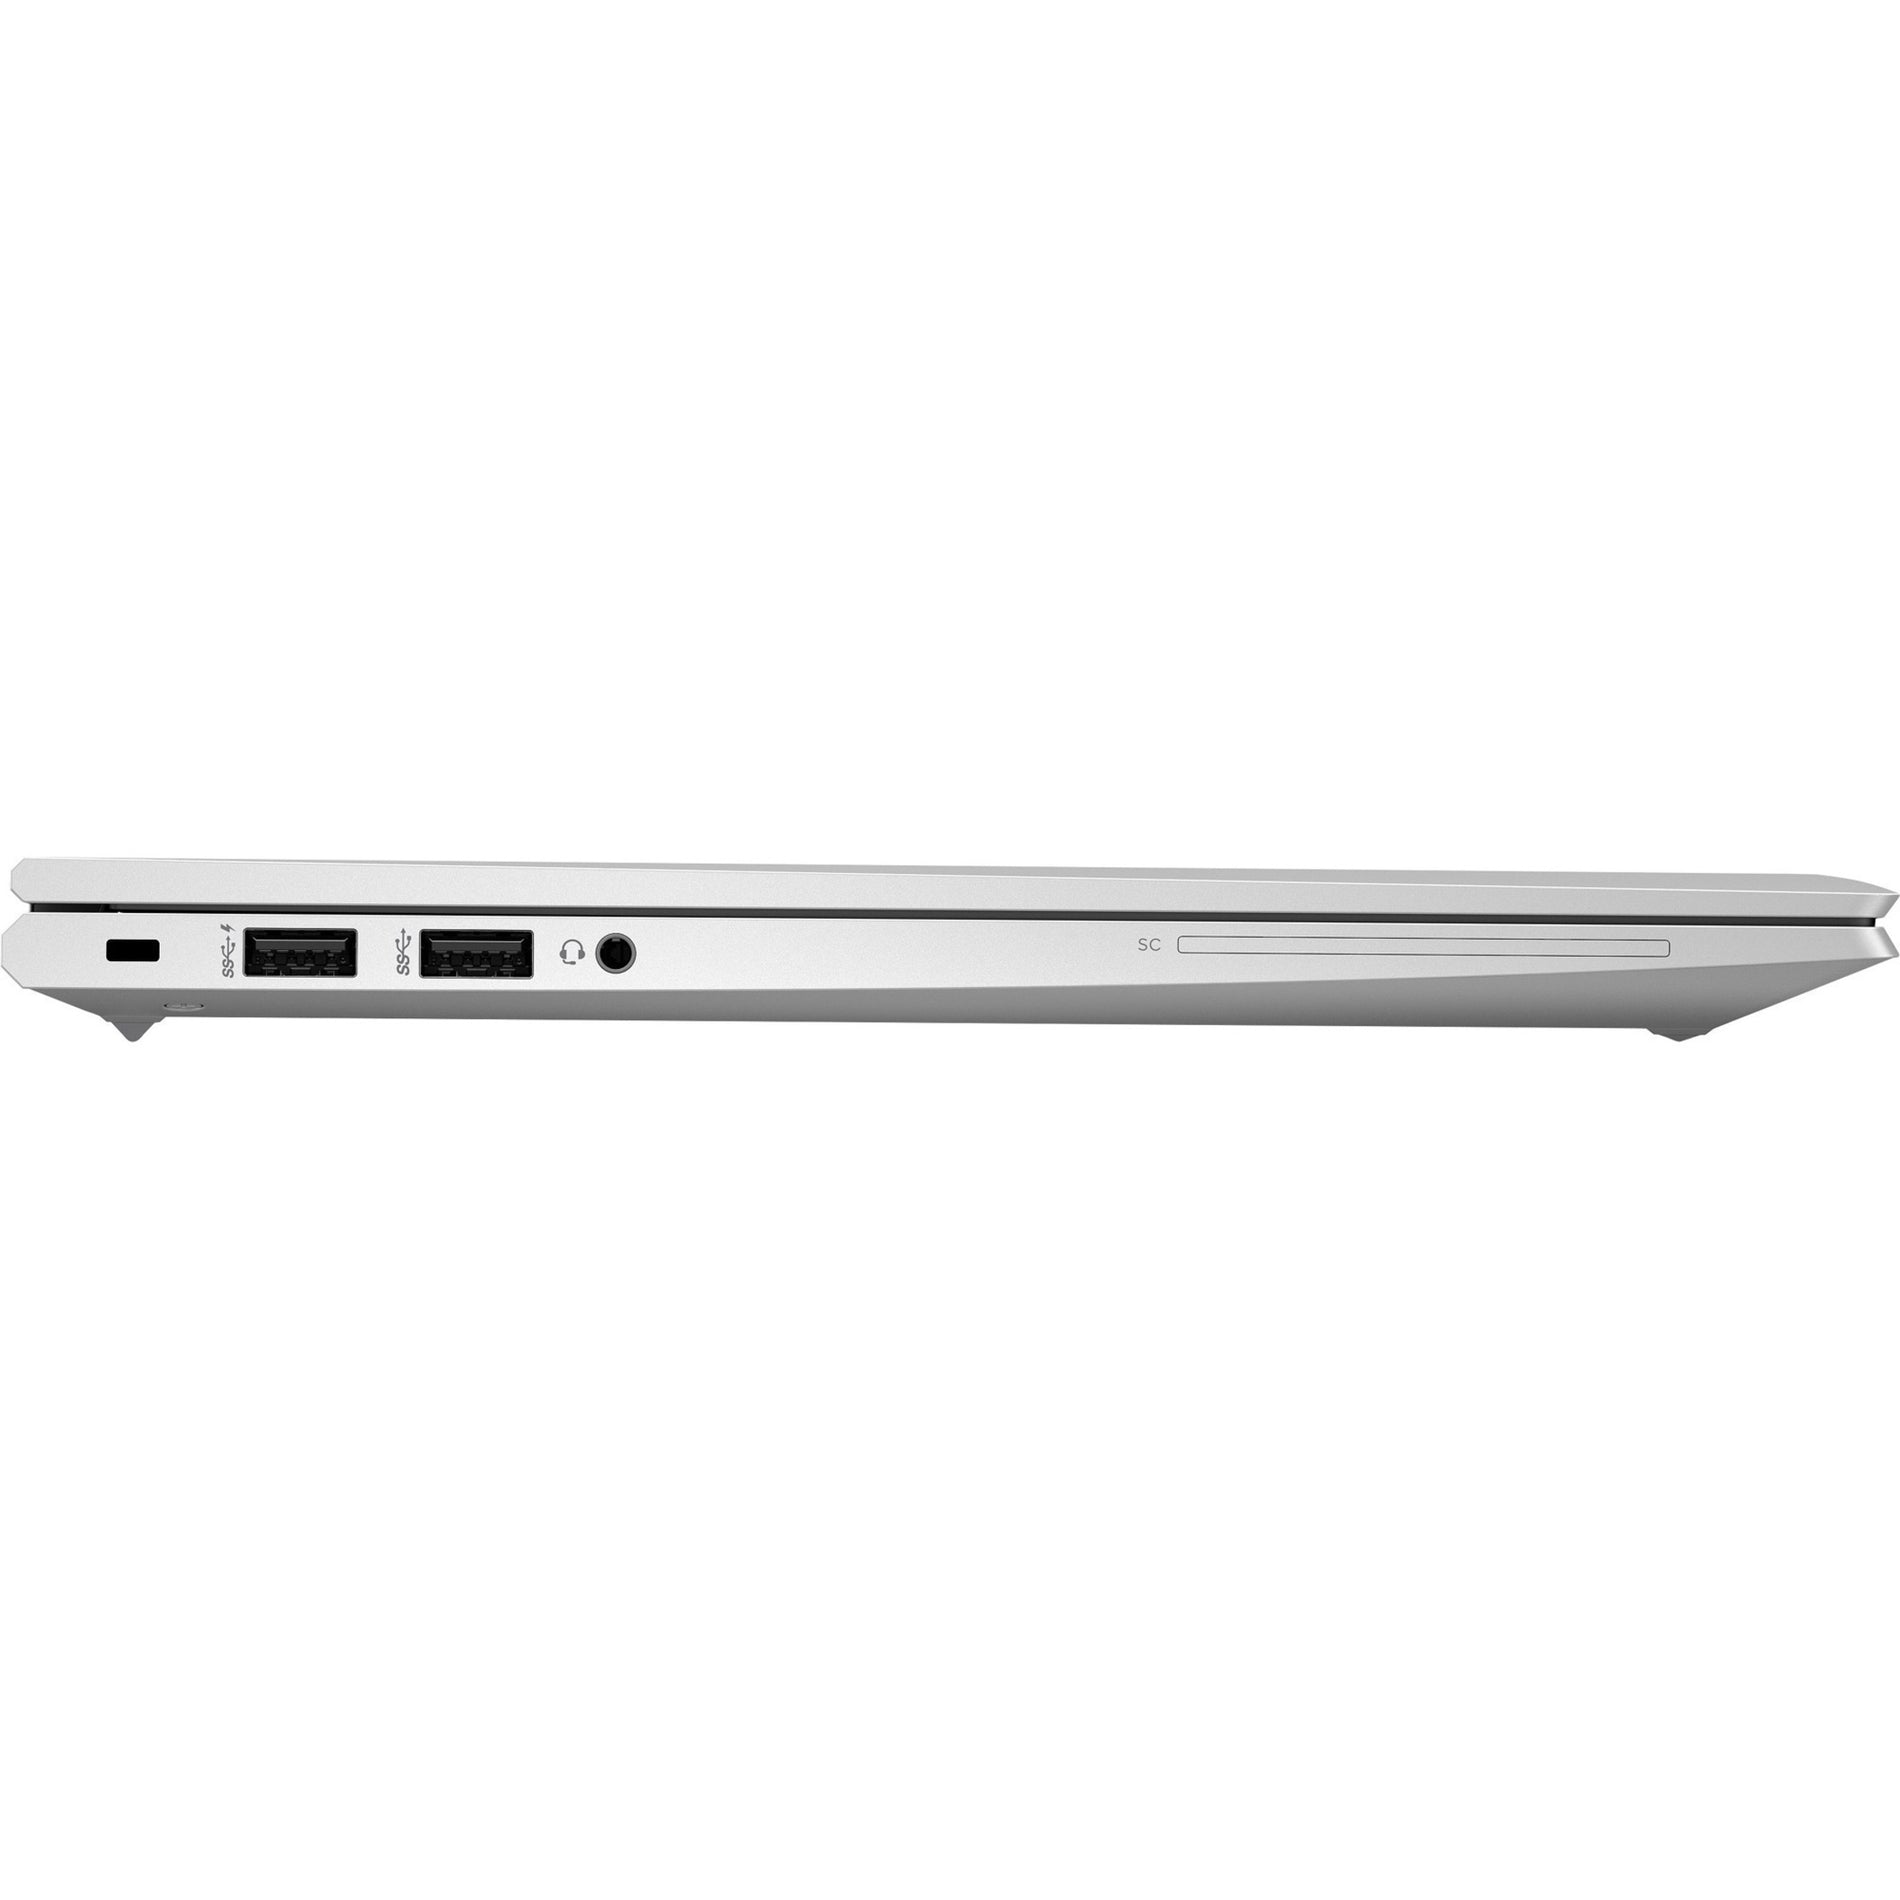 HP EliteBook 840 G8 Notebook PC, 14" Intel Core i7, 8GB RAM, 512GB SSD, Windows 10